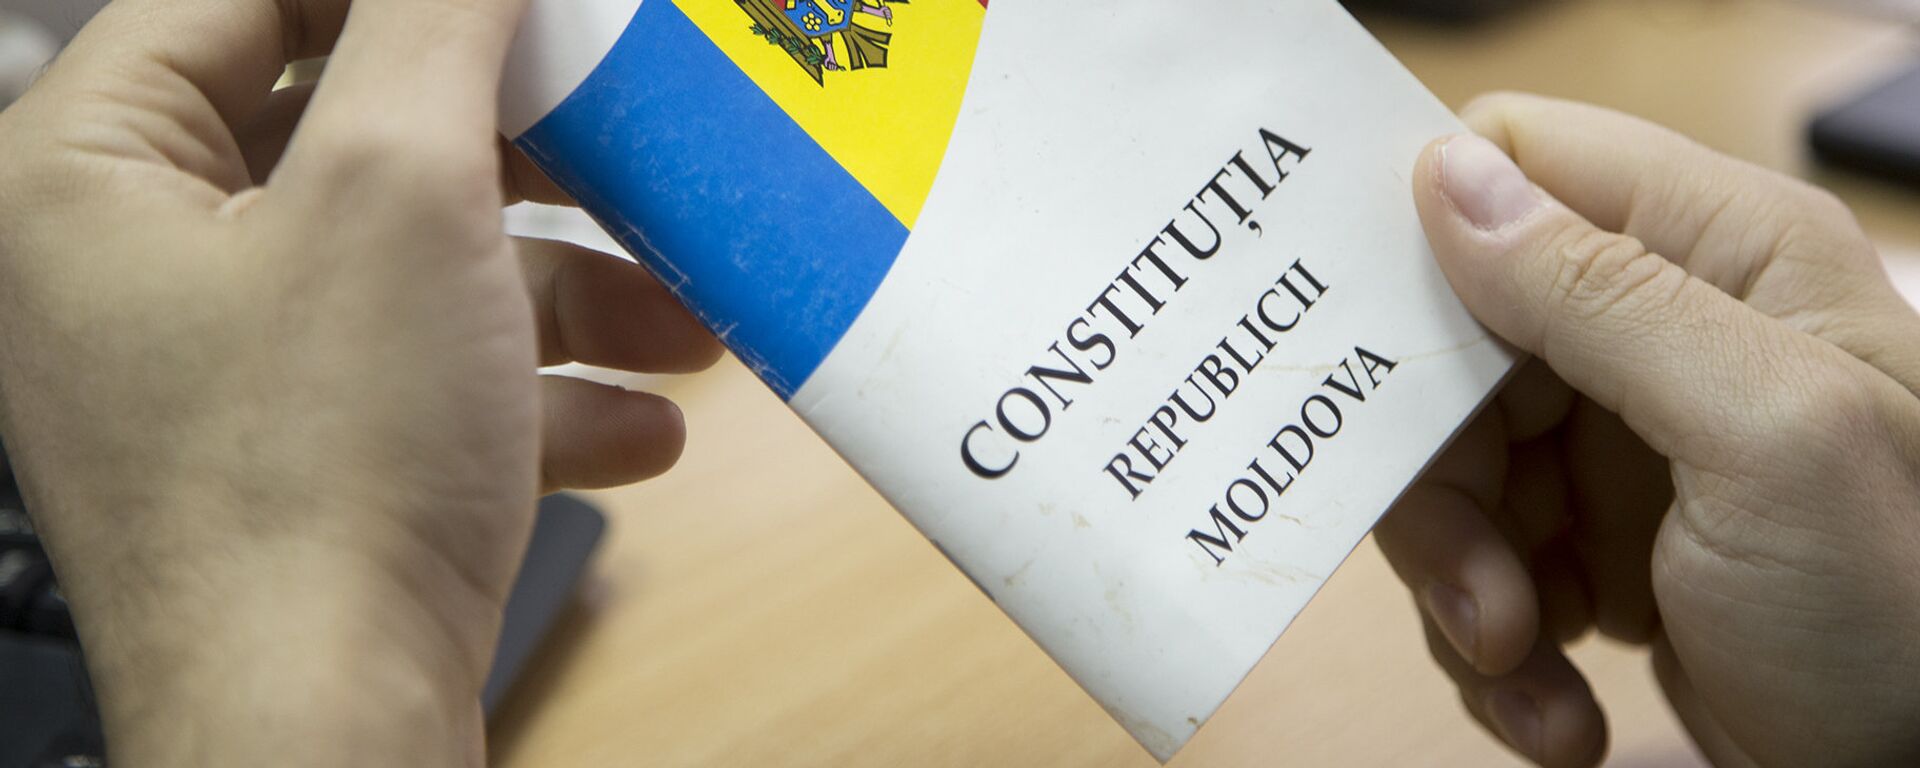 Constituția Republicii Moldova - Sputnik Moldova, 1920, 23.09.2021